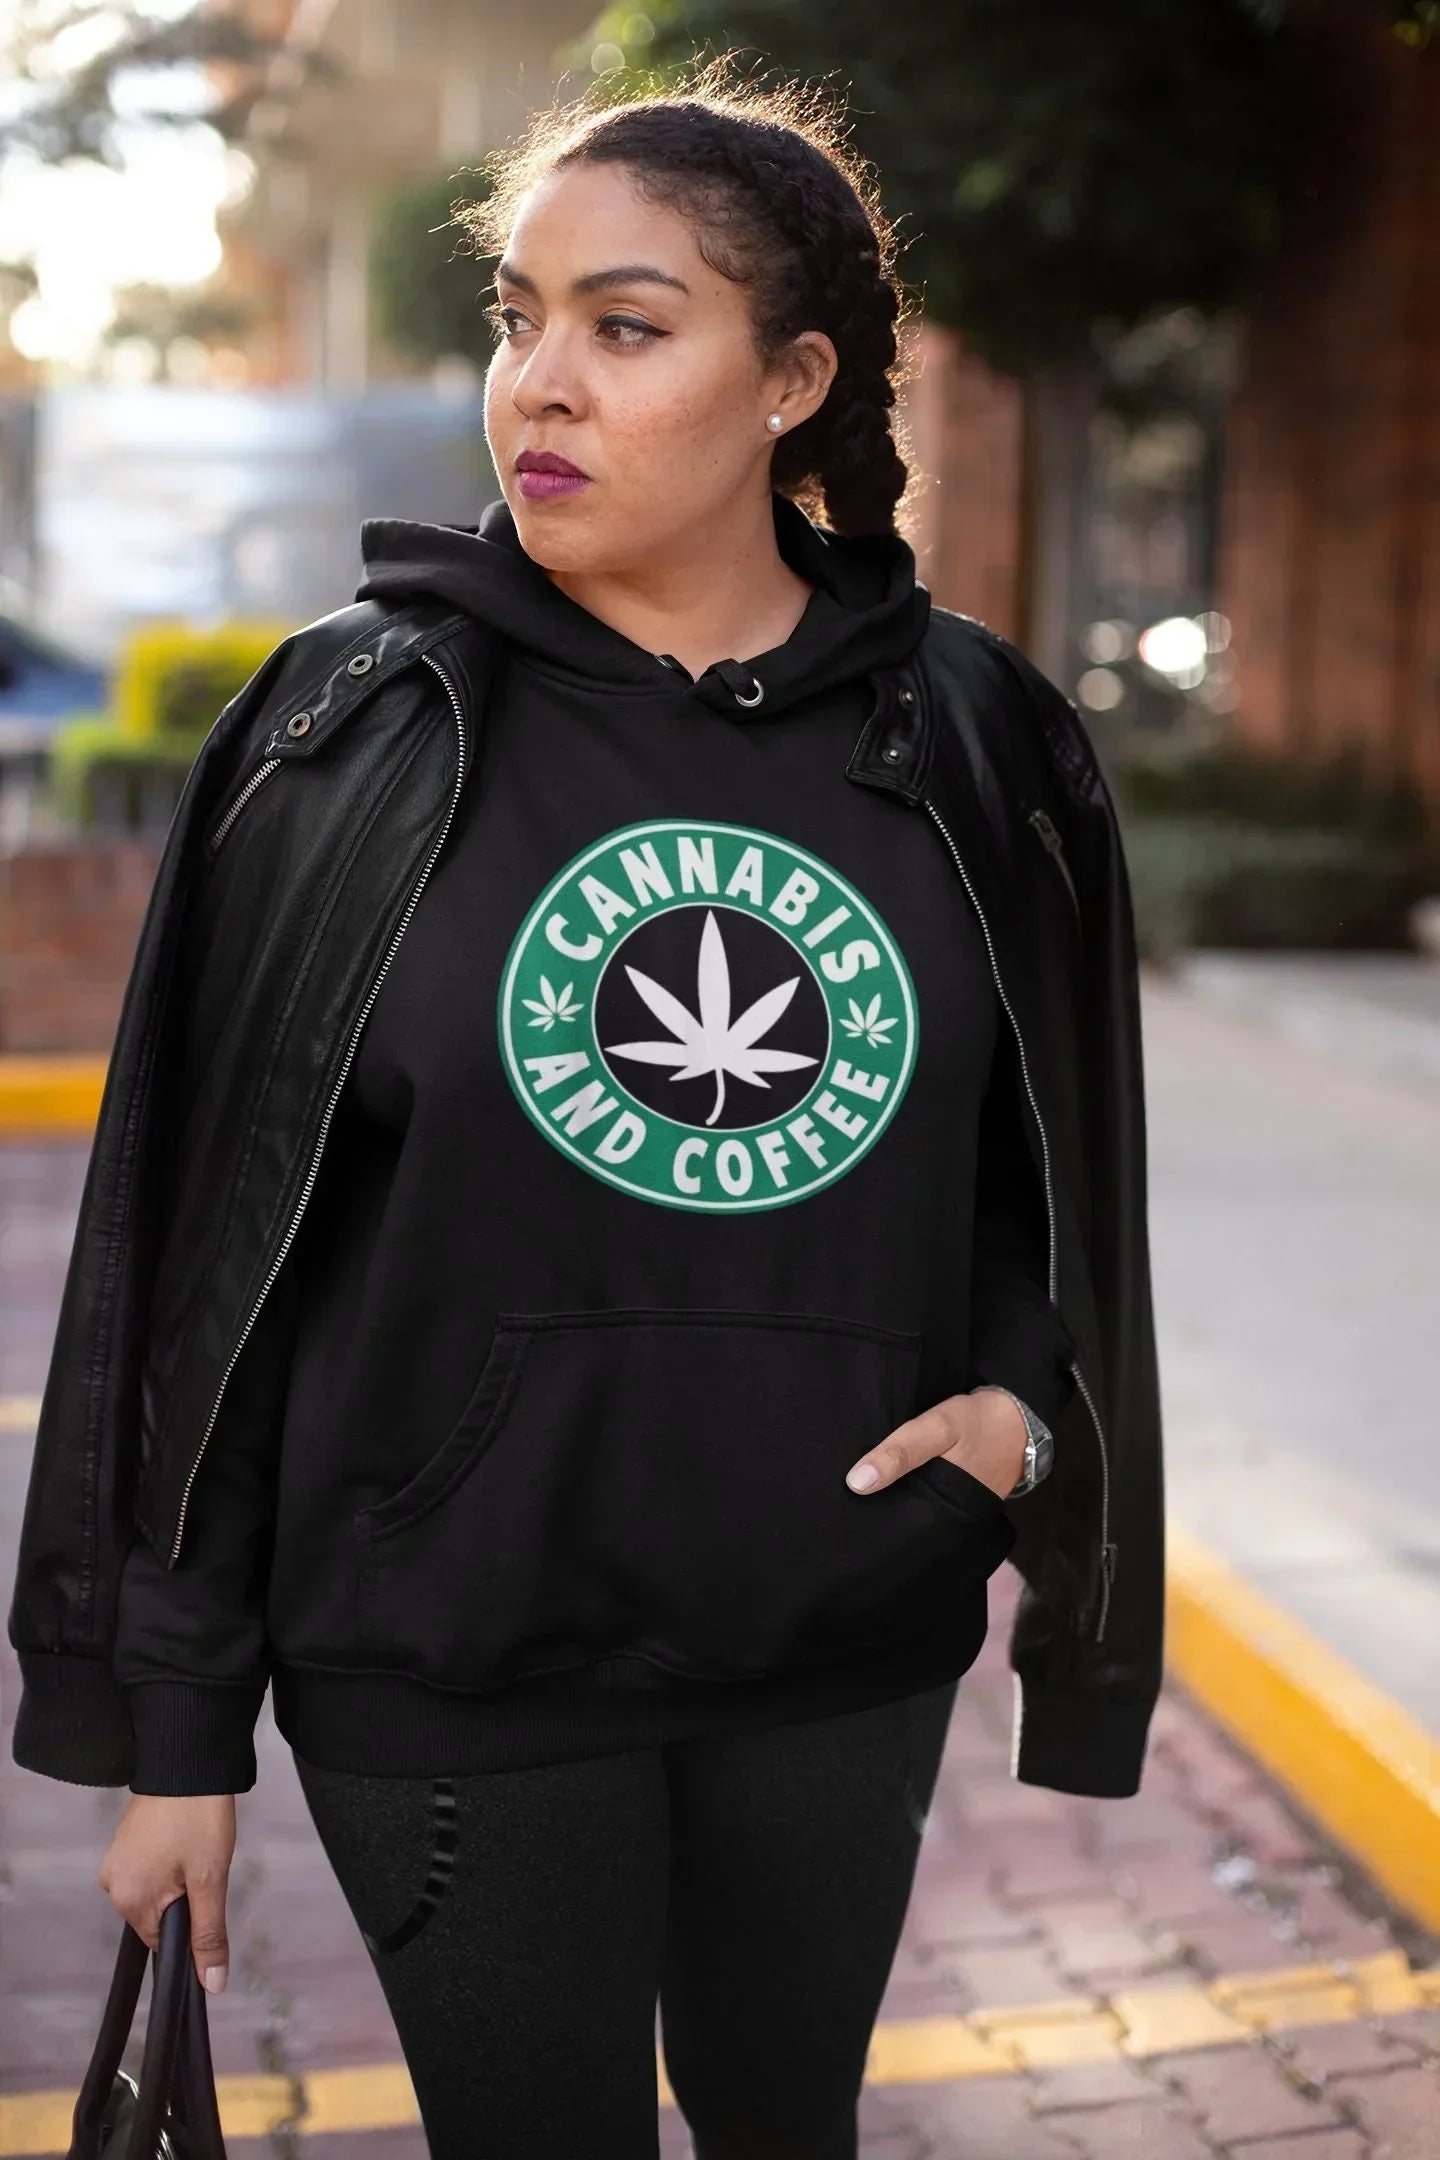 Coffee and Cannabis, Stoner Girl Shirt